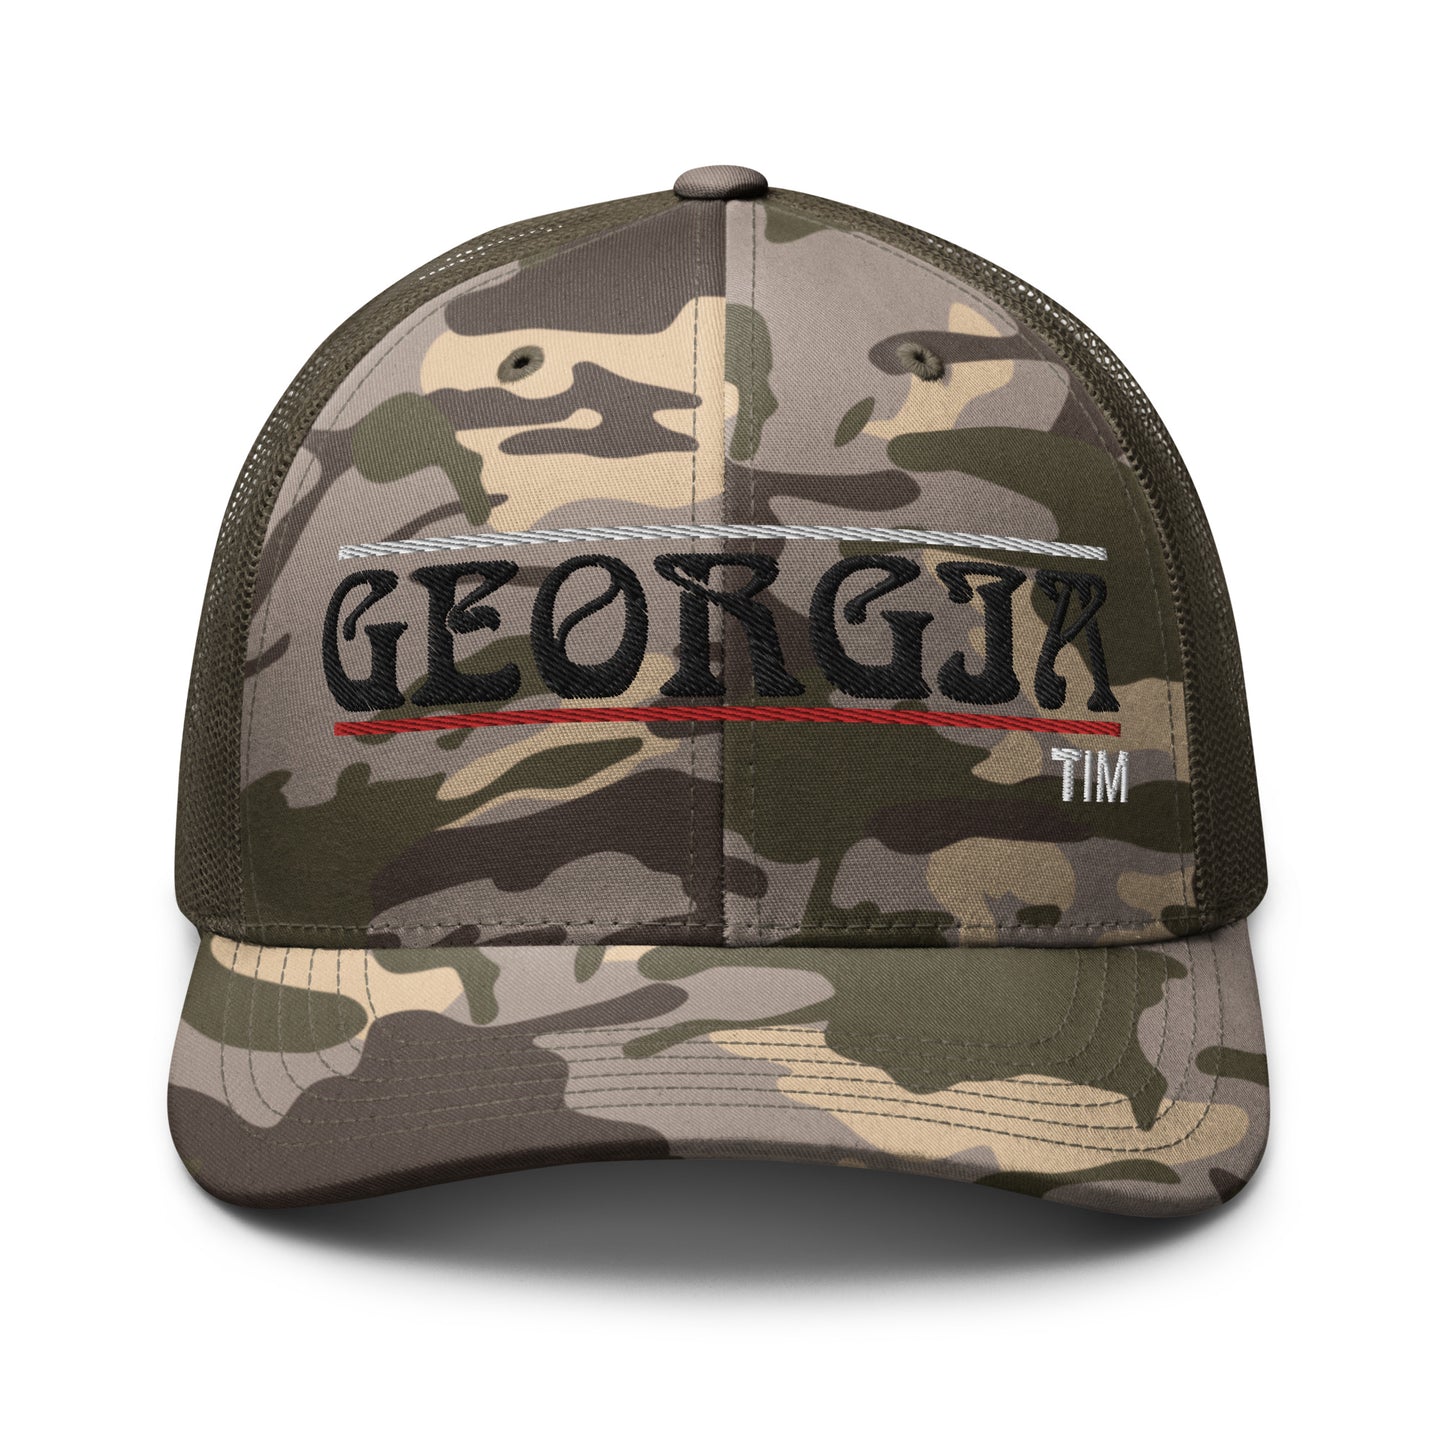 GEORGIA Camouflage trucker hat